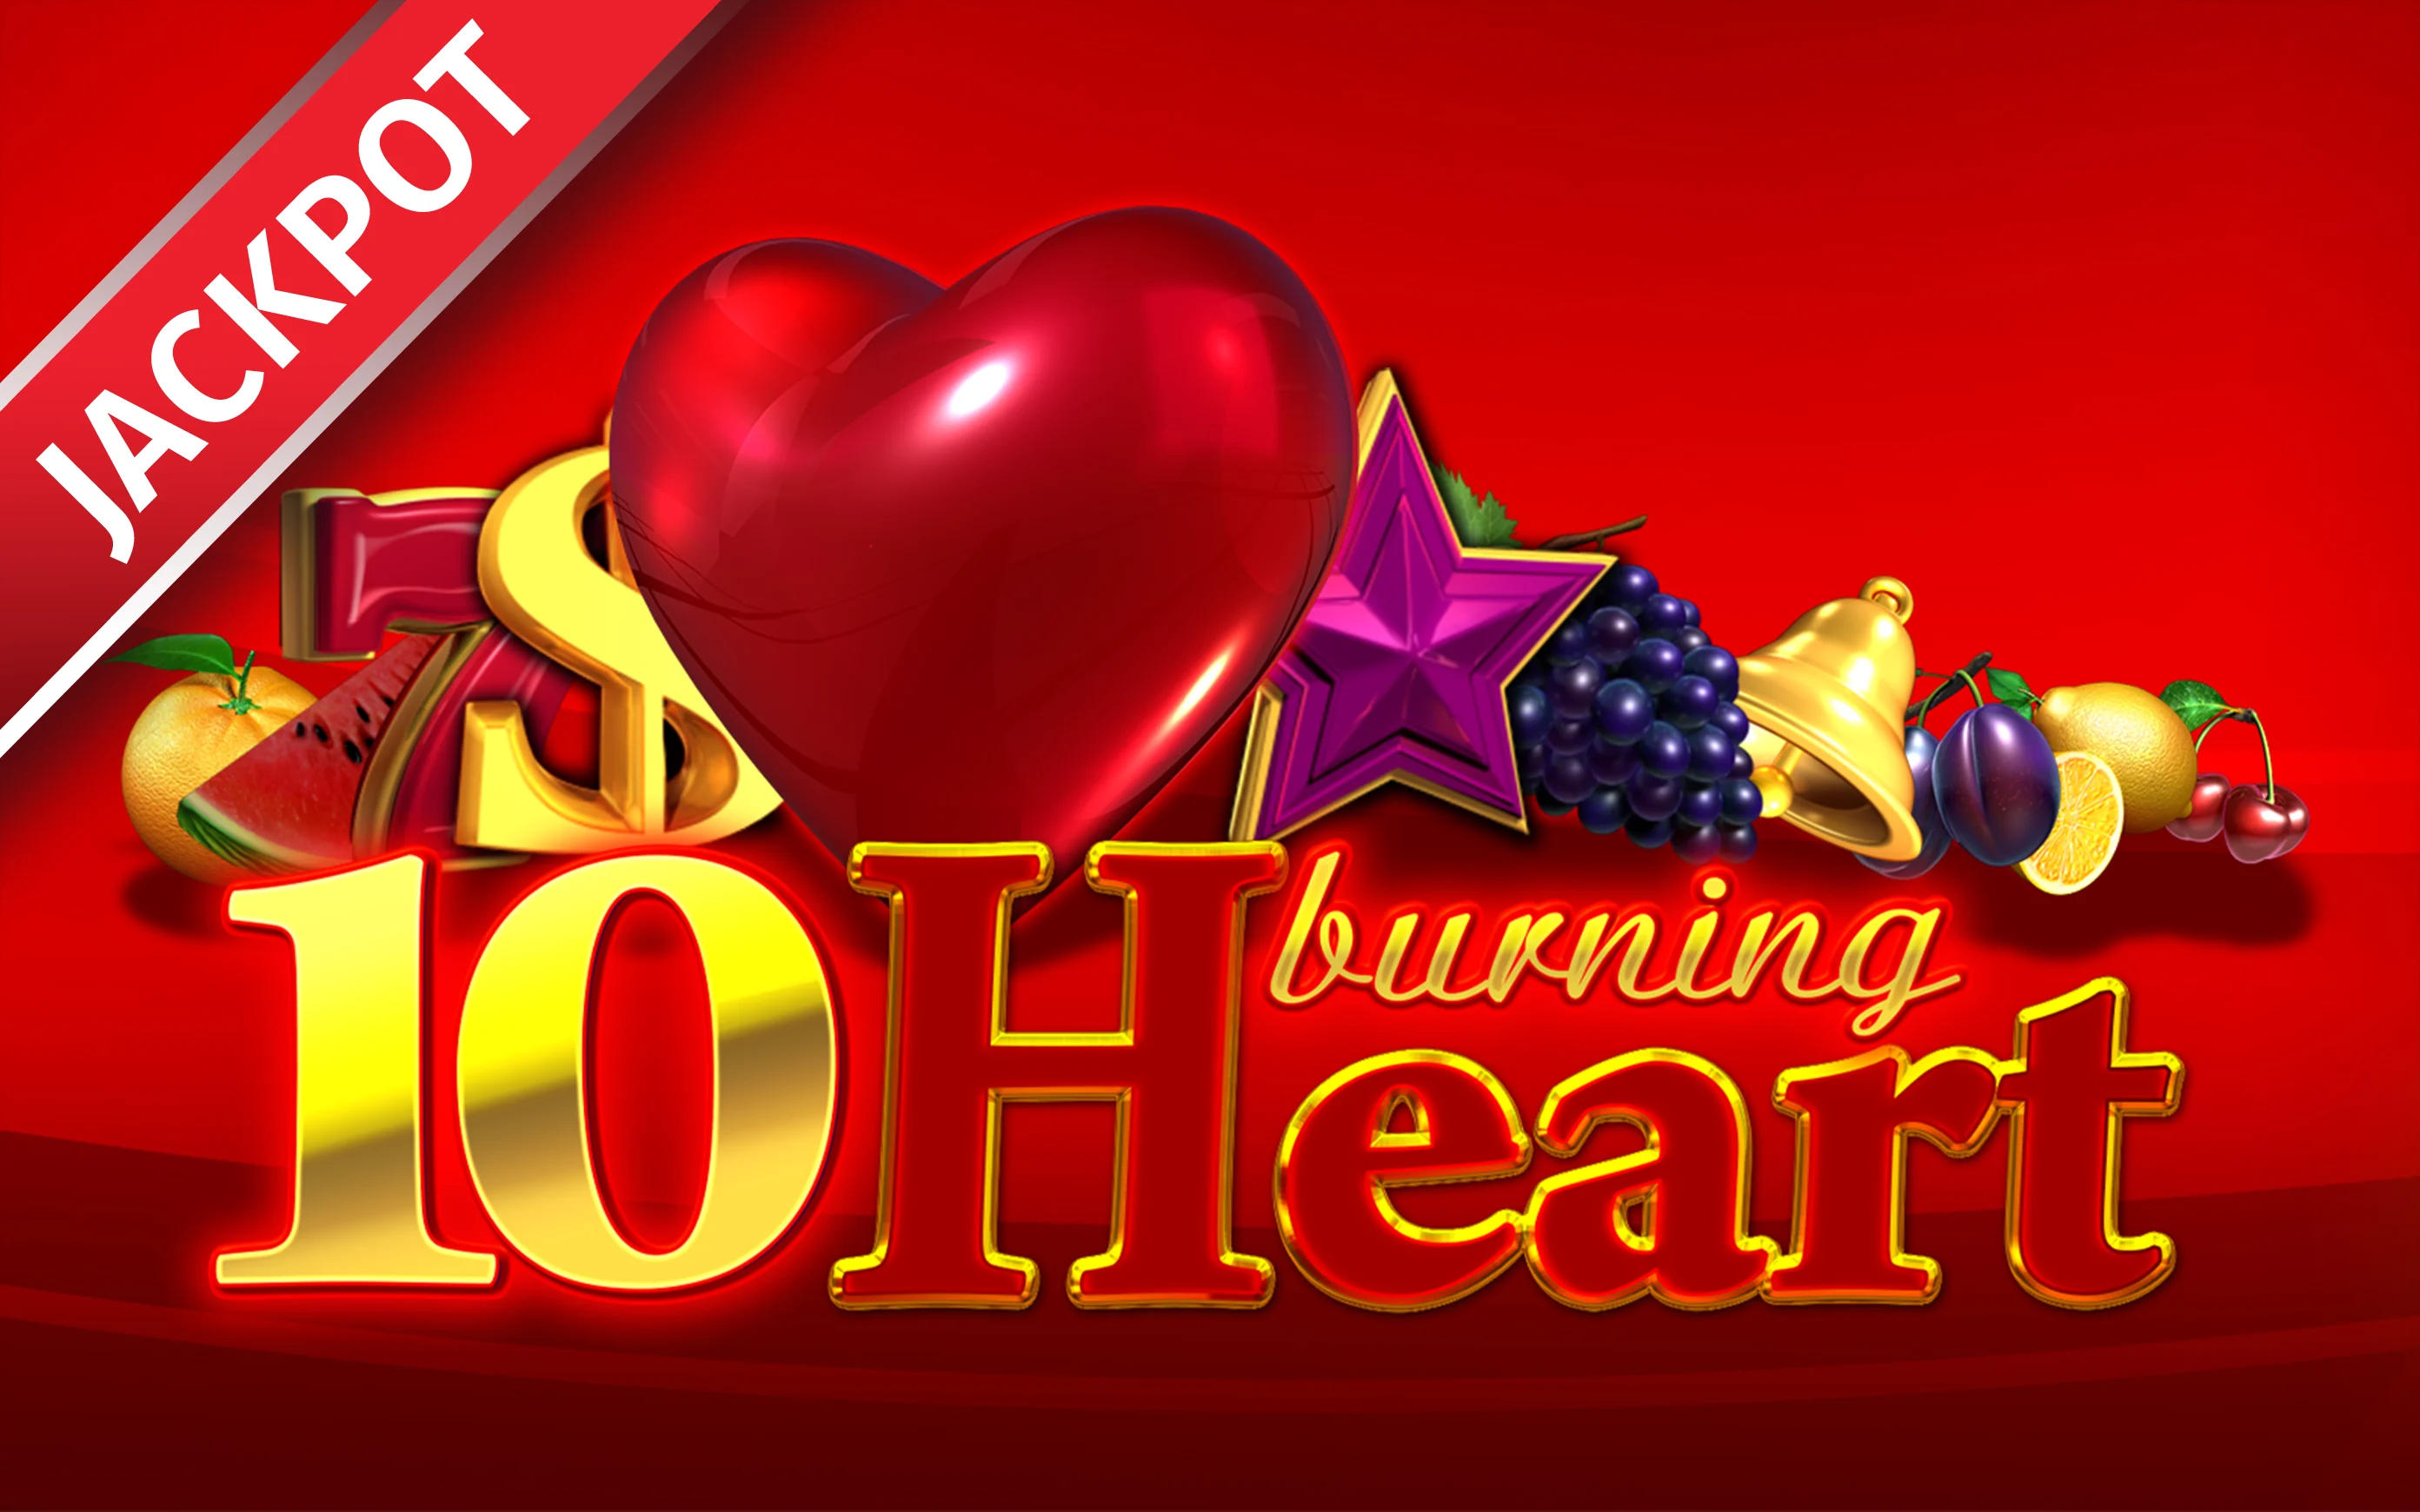 Gioca a 10 Burning heart sul casino online Starcasino.be